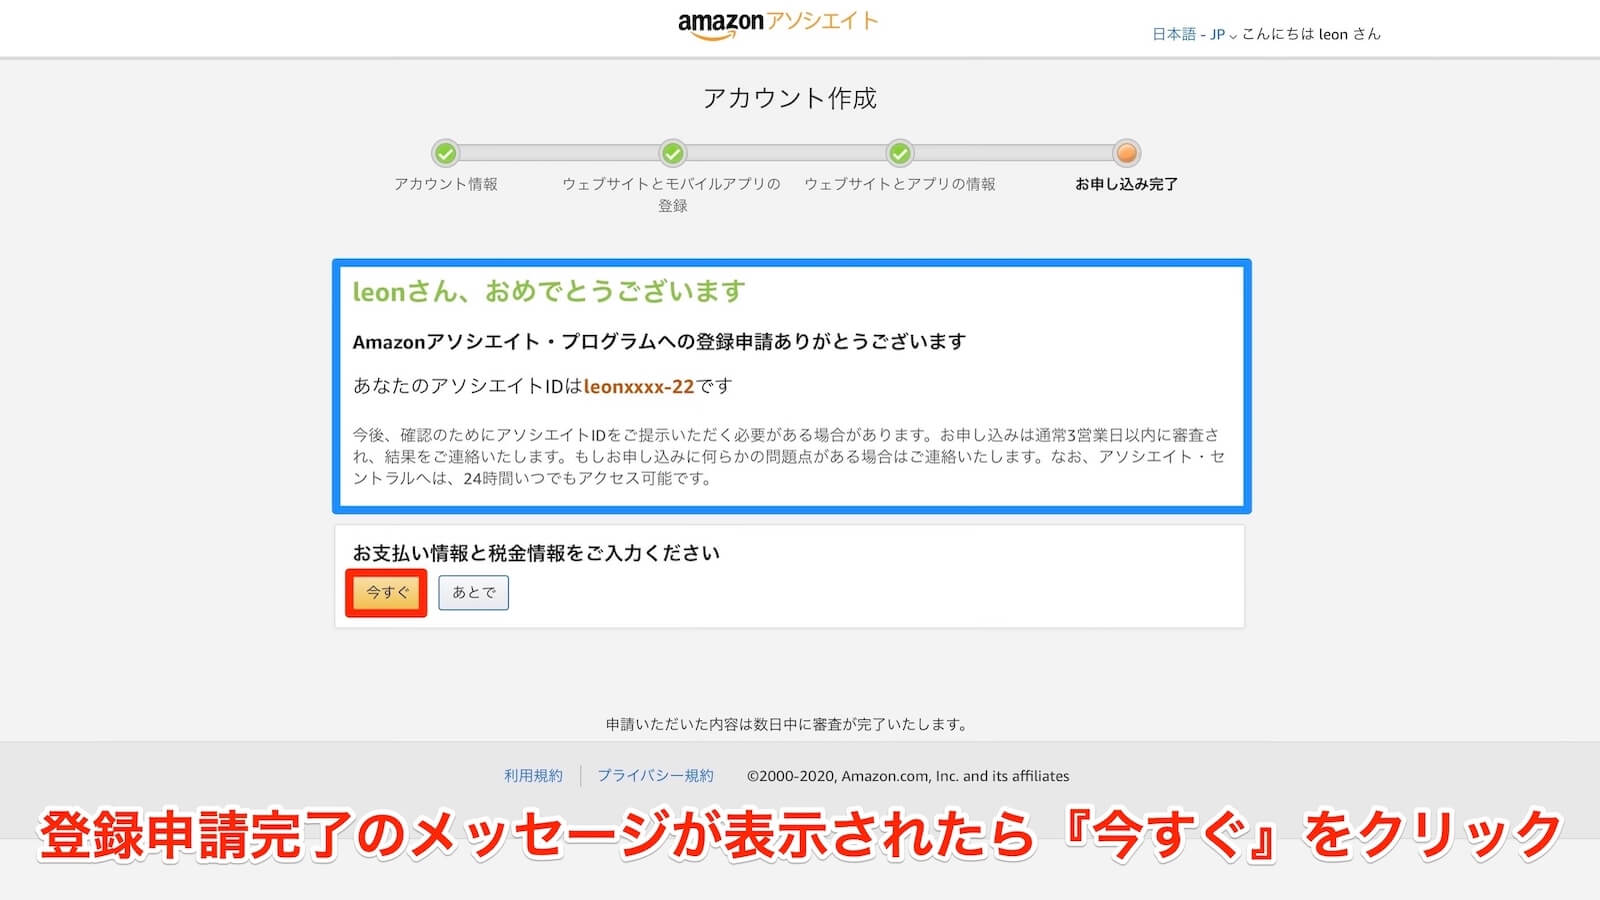 Amazon Associate Account Information Input Screen Capture